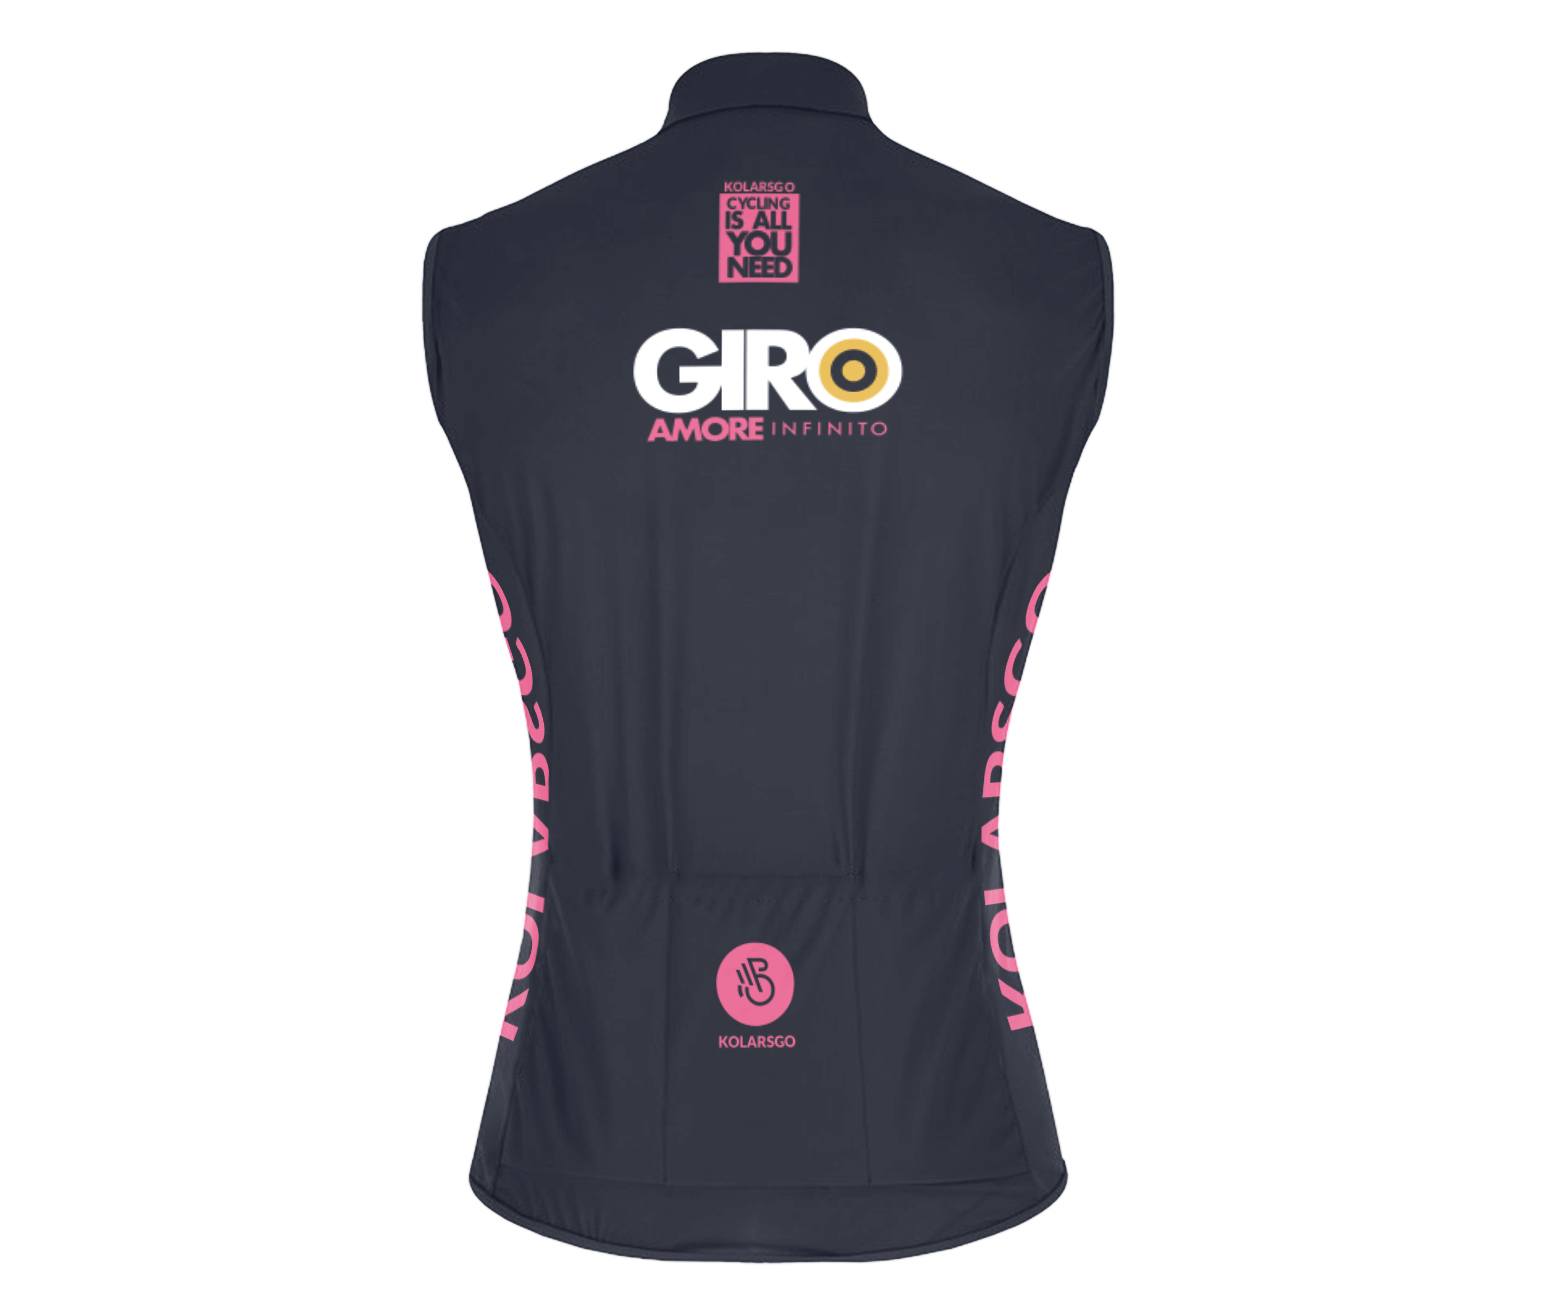 GIRO BLUE cycling vest image 2